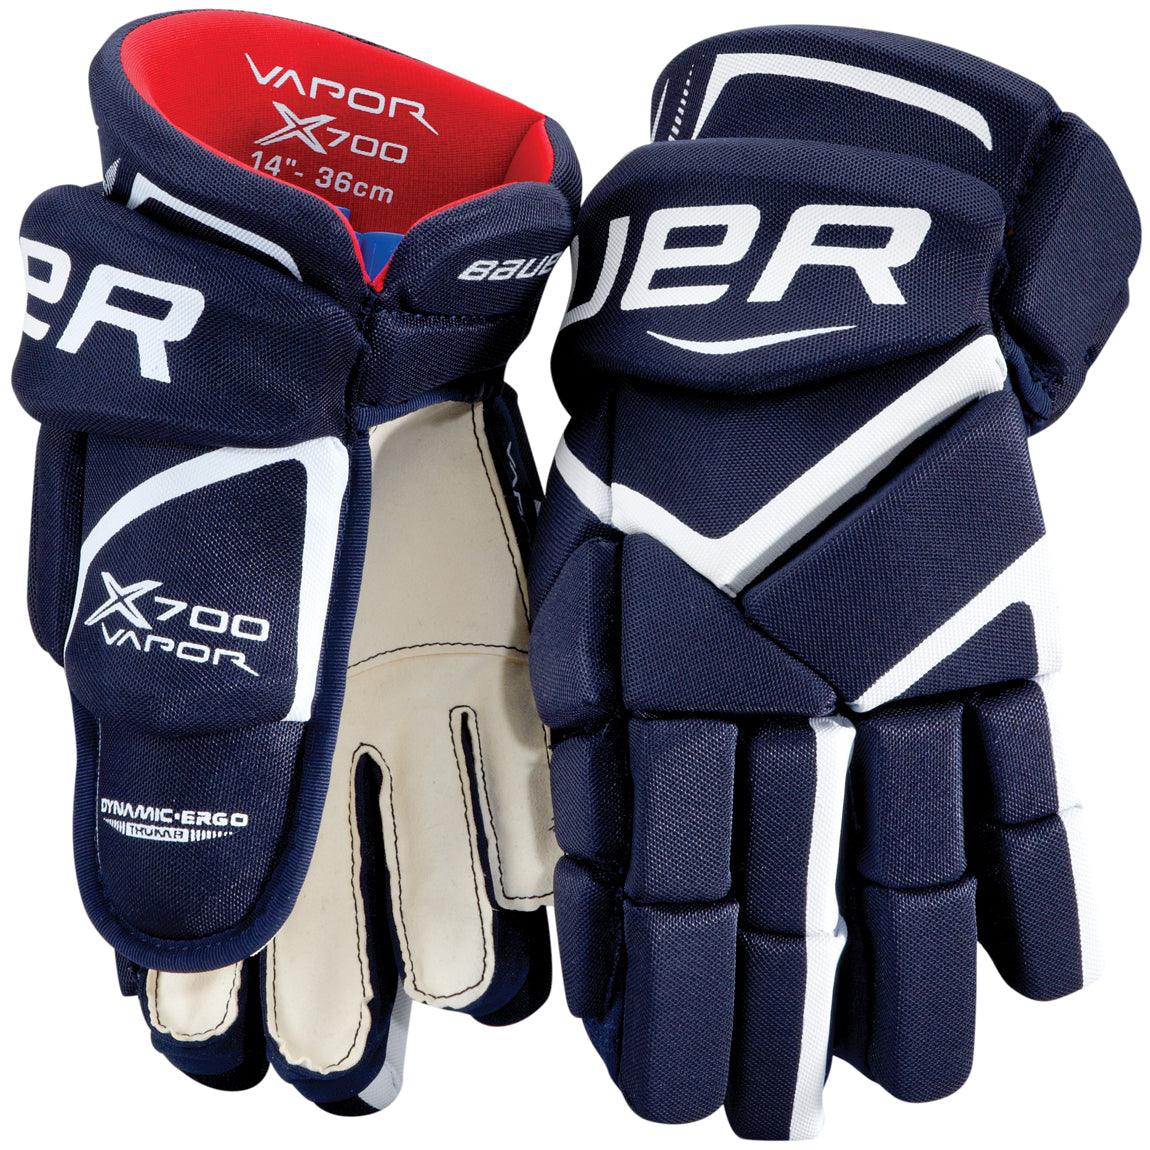 Vapor X700 Gloves - Senior - Sports Excellence